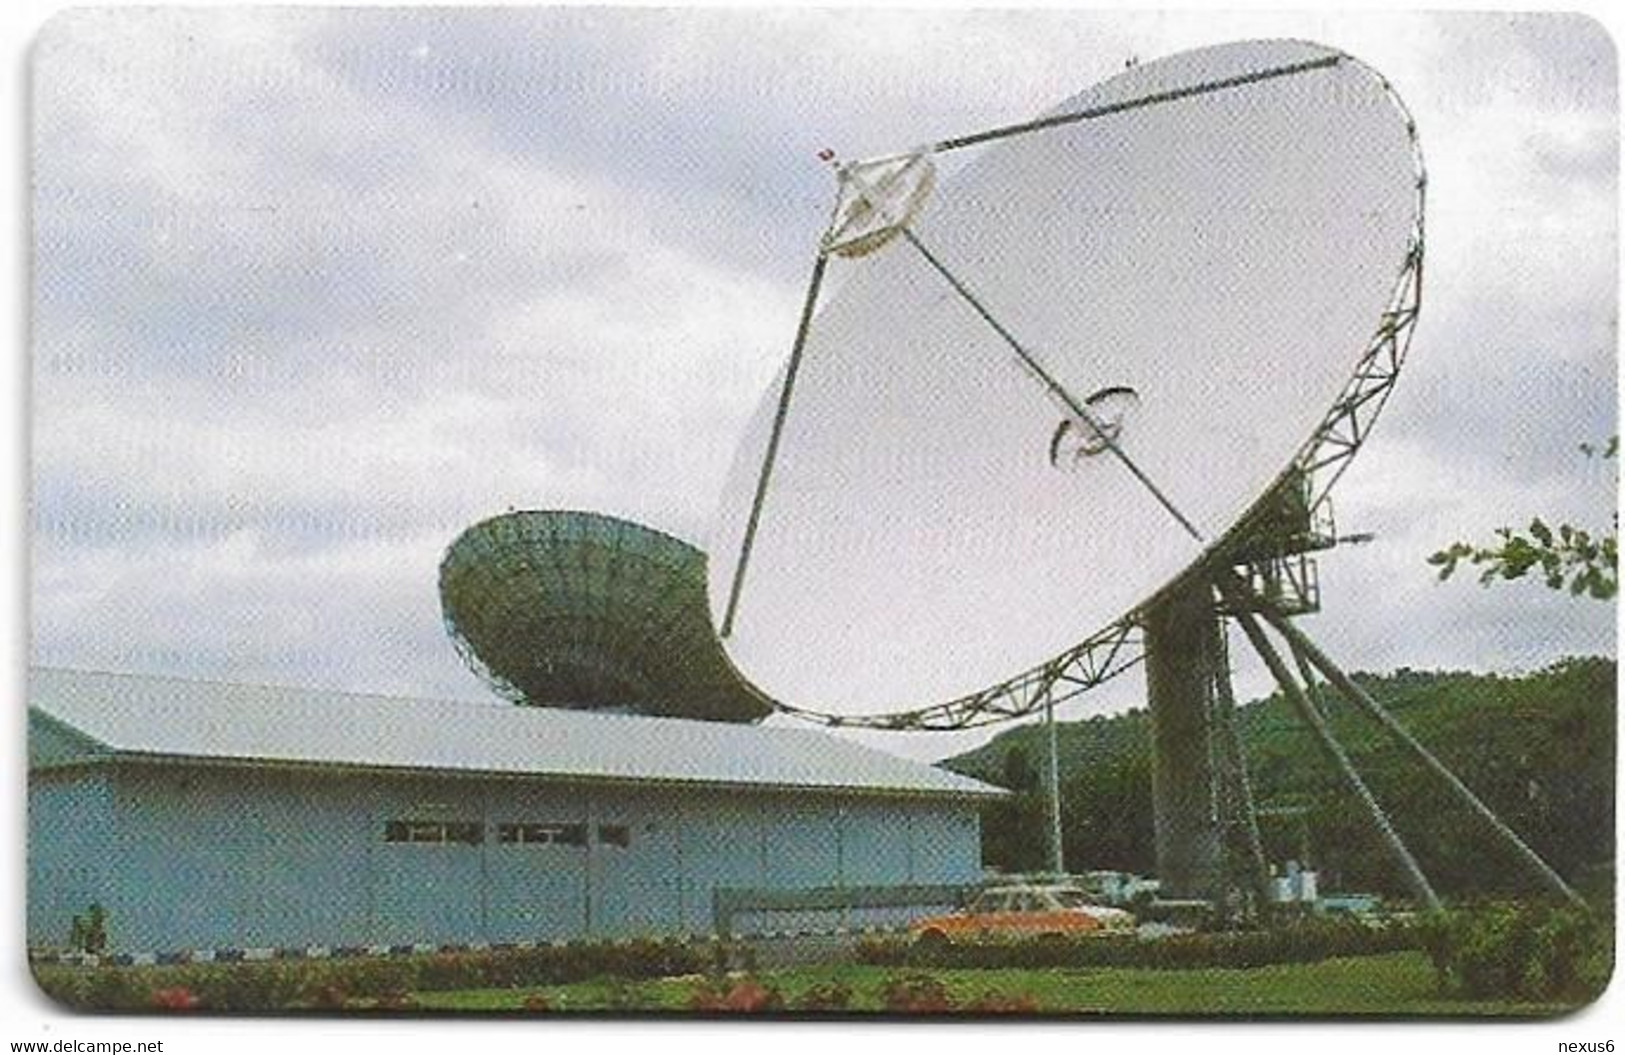 Nigeria - Nitel LTD - Earth Station, Cn. 1NAIFIA Normal 0 - Chip Siemens S37, 100Units, Used - Nigeria